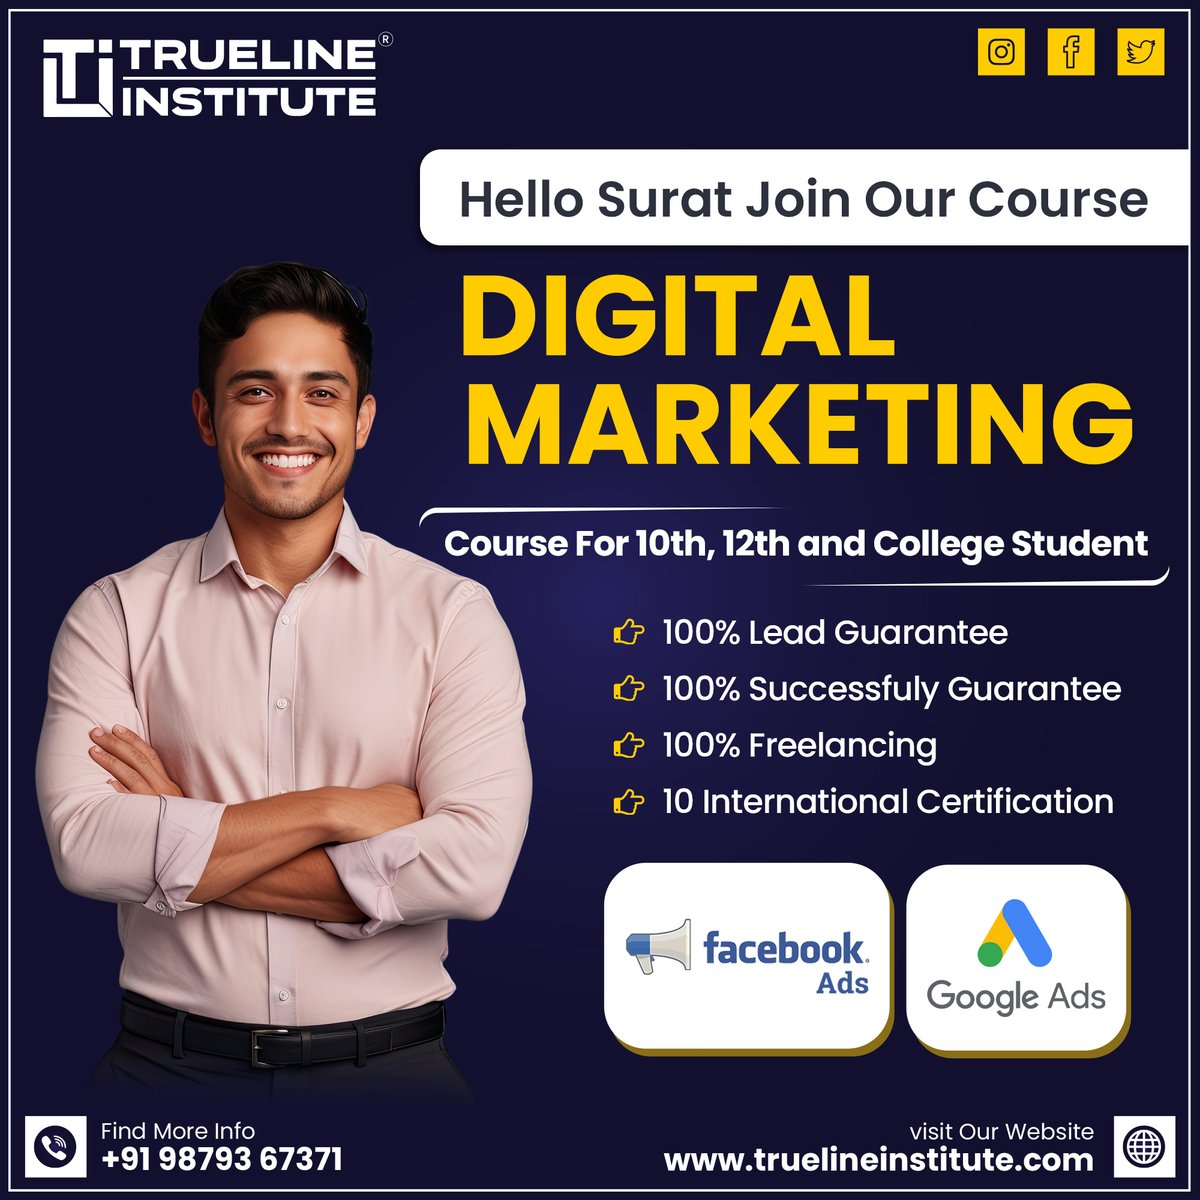 📢 Hello Surat Join Our Course Digital Marketing | Trueline Institute
☎️ +91 98793 67371
🌐truelineinstitute.com
📧truelineinstitute@gmail.com
#truelineinstitute #institute #itcourses #onlinemarketing #digitalstrategy #socialmediamarketing #contentmarketing #emailmarketing